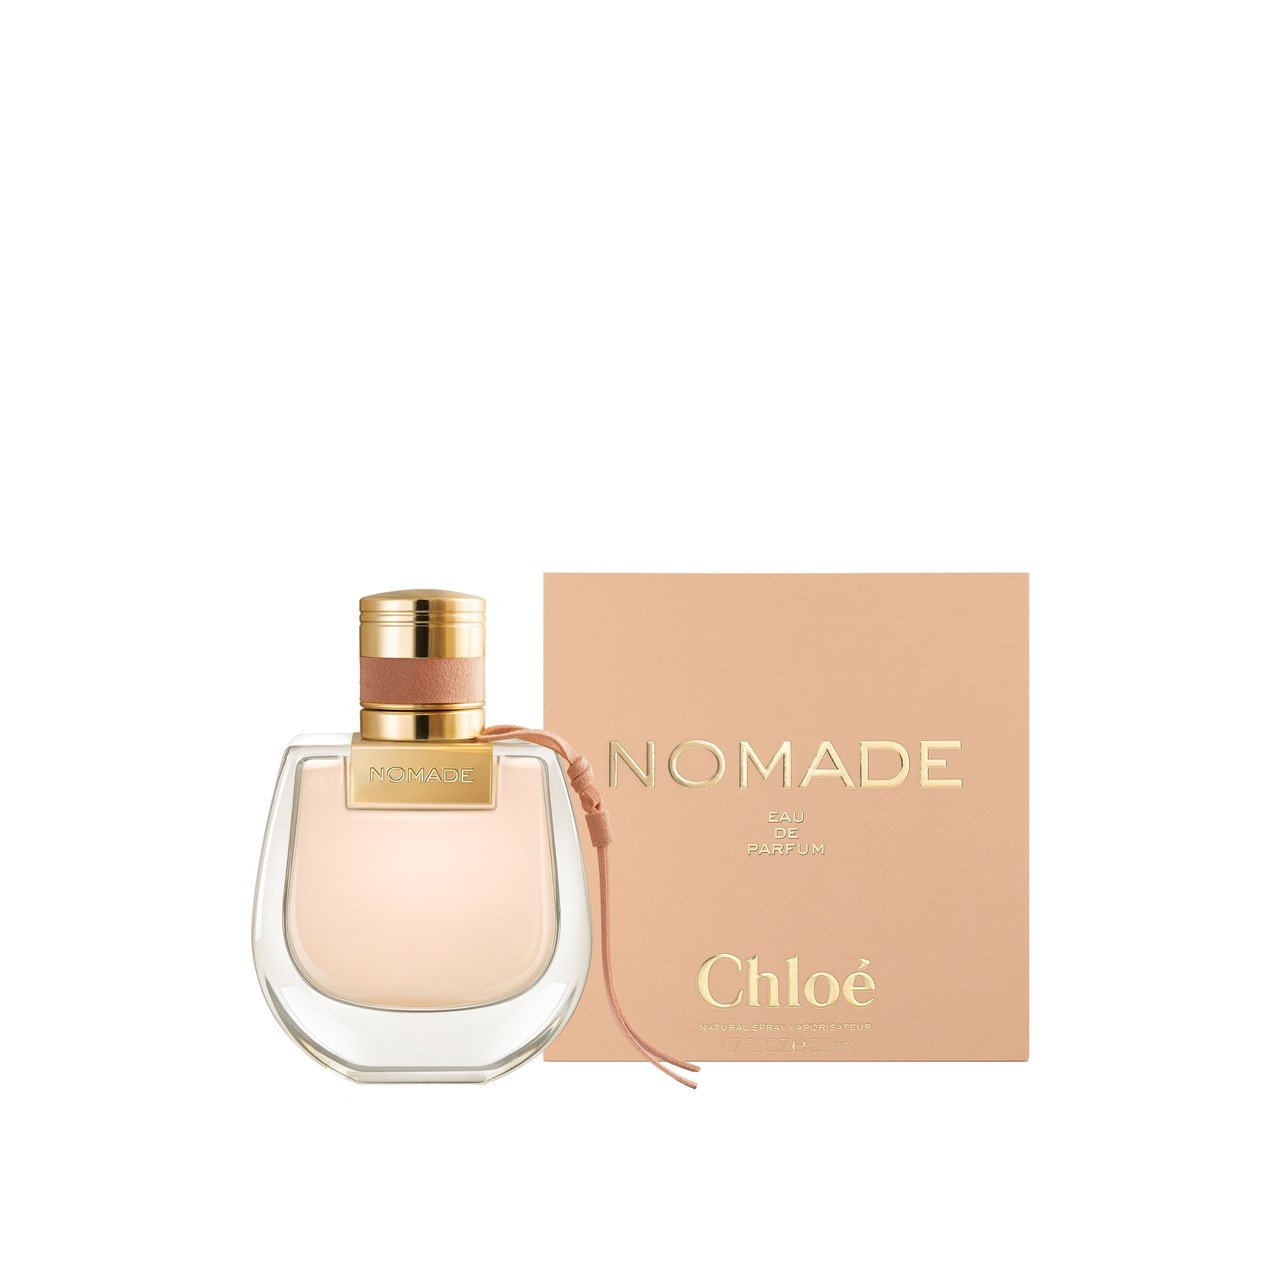 Chloé Nomade Eau de Parfum 50ml (1.7fl oz)